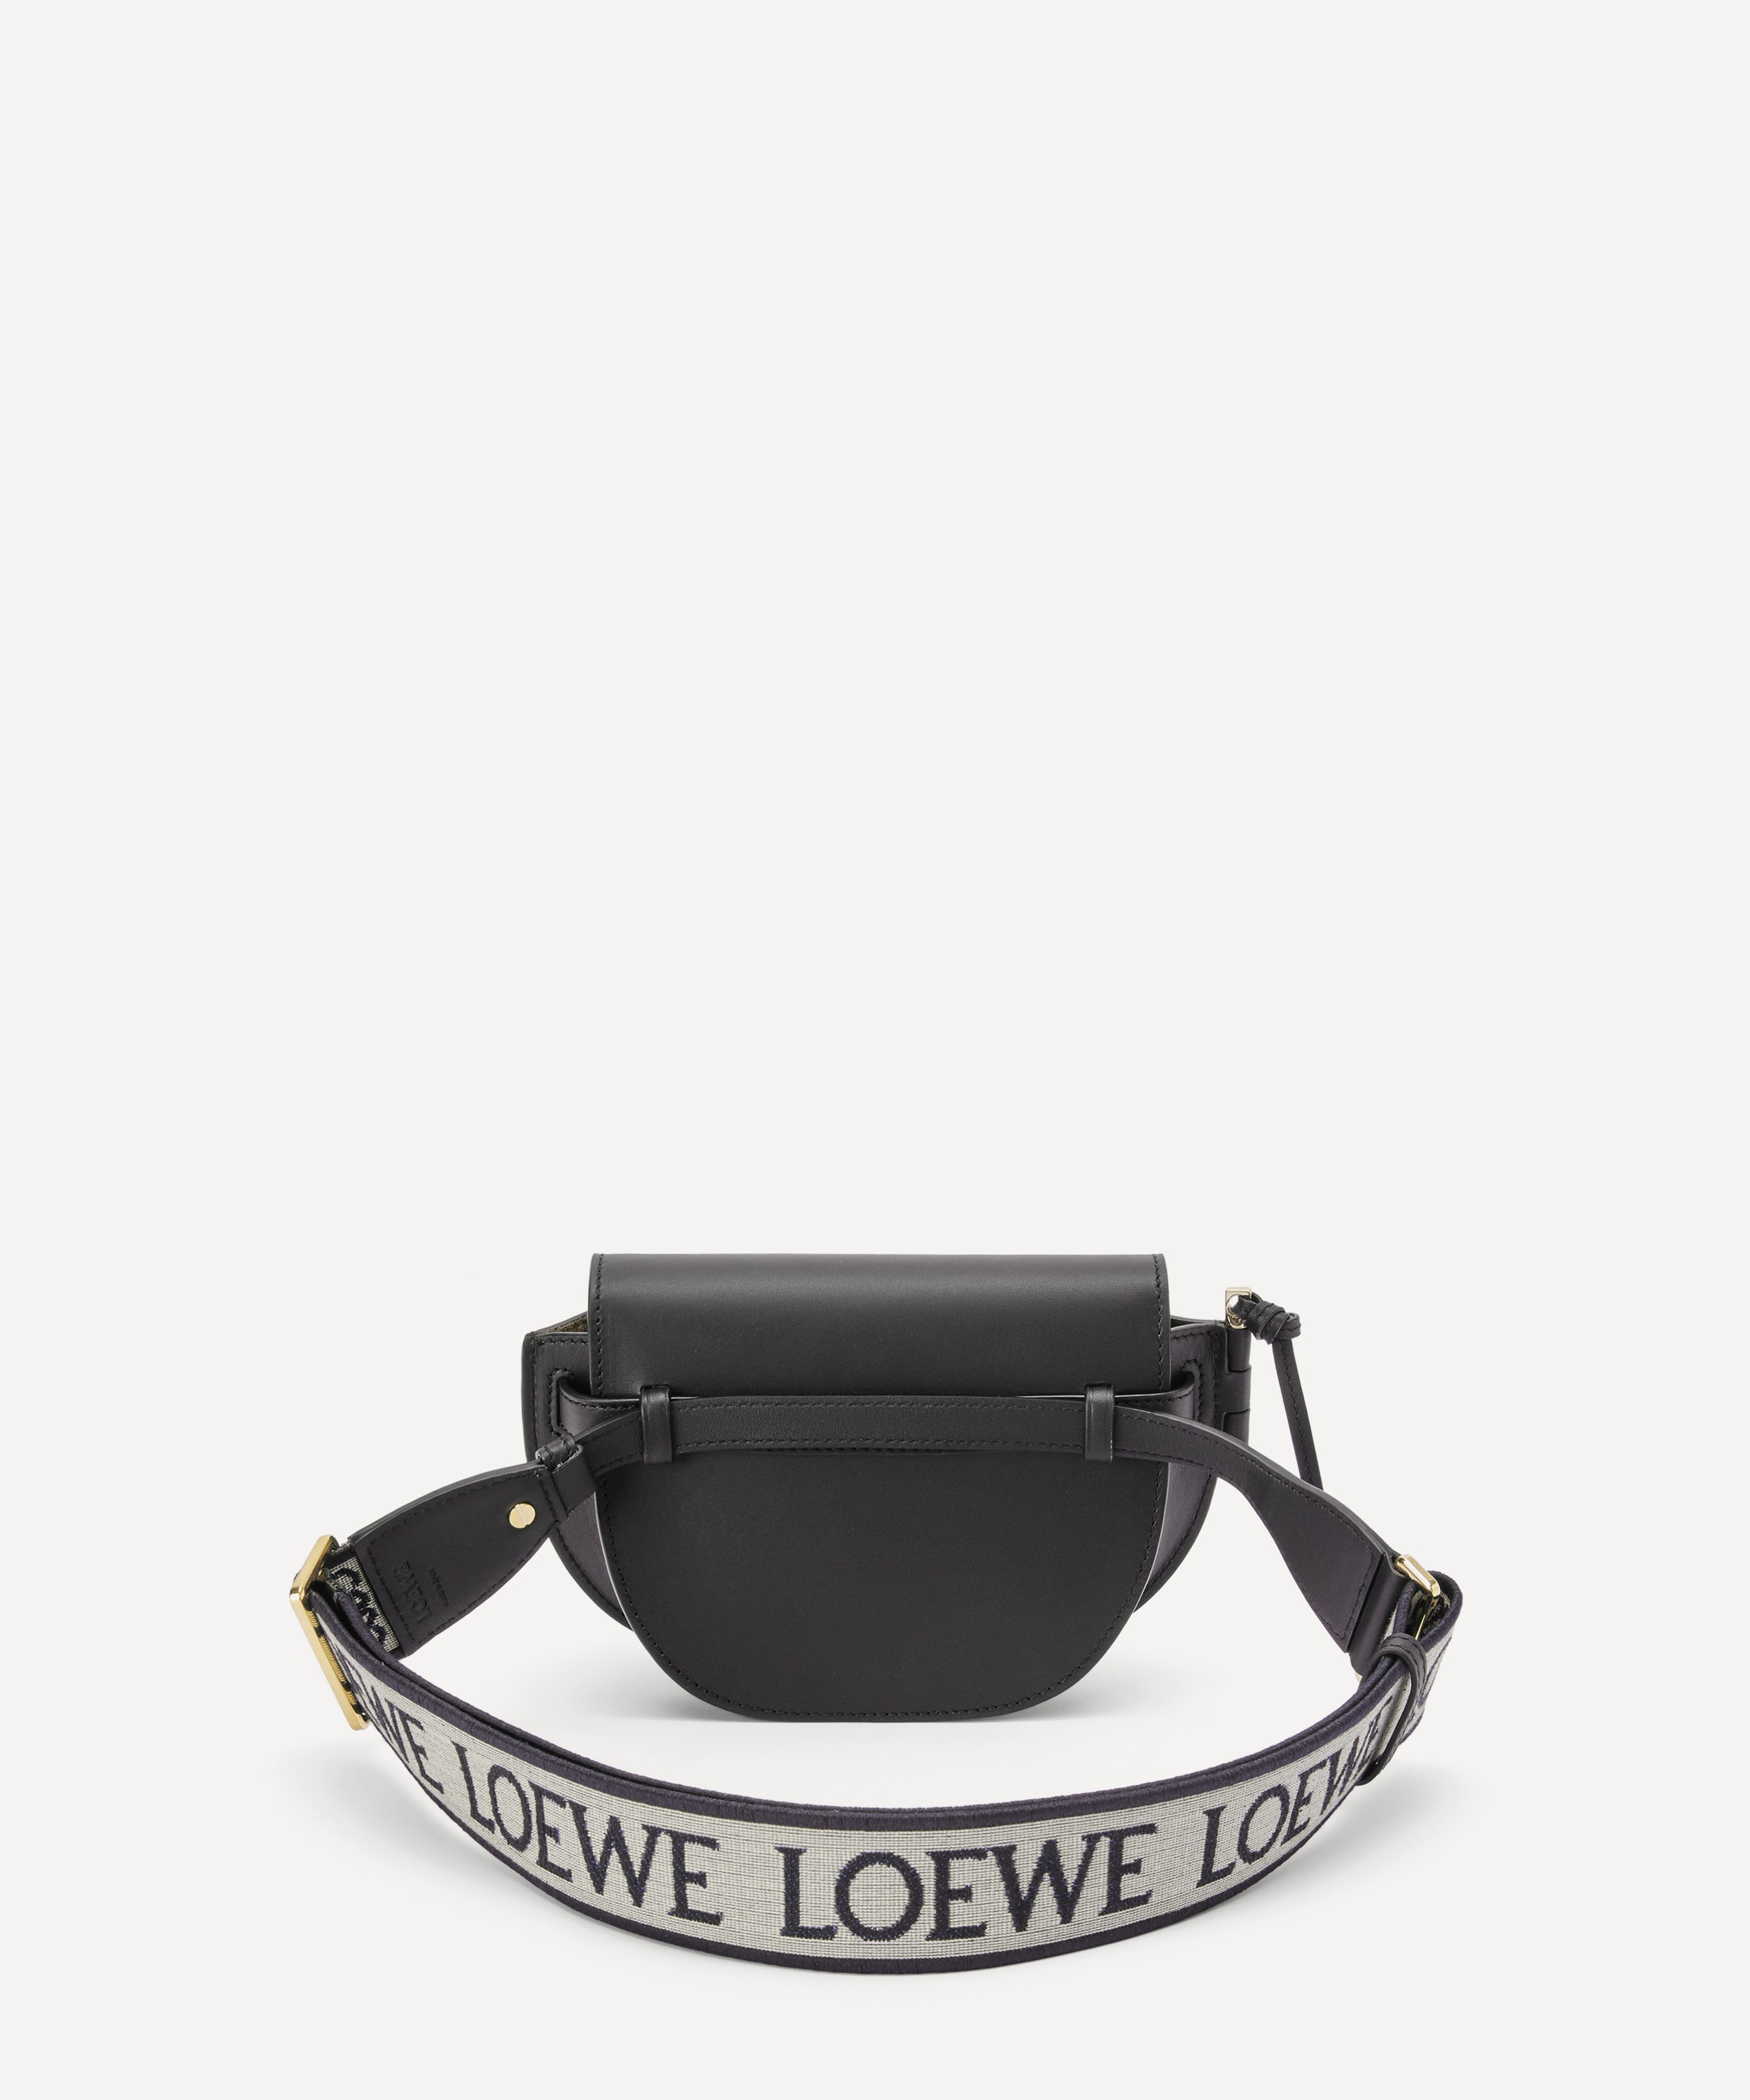 Black Gate mini leather cross-body bag, LOEWE